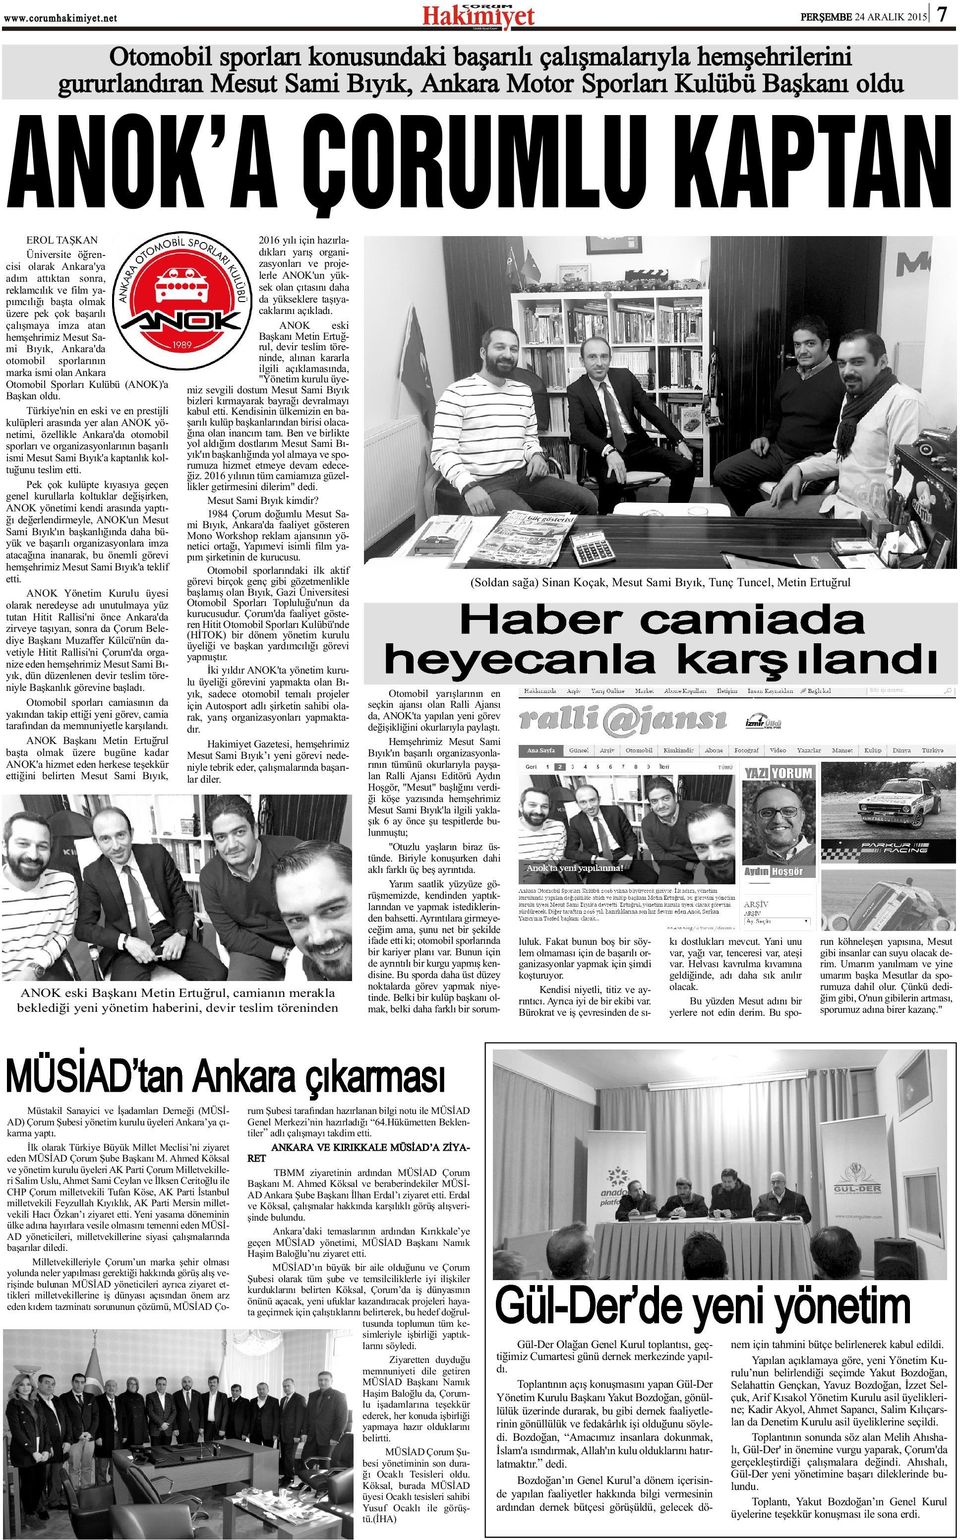 otomobil sporlarýnýn marka ismi olan Ankara Otomobil Sporlarý Kulübü (ANOK)'a Baþkan oldu.